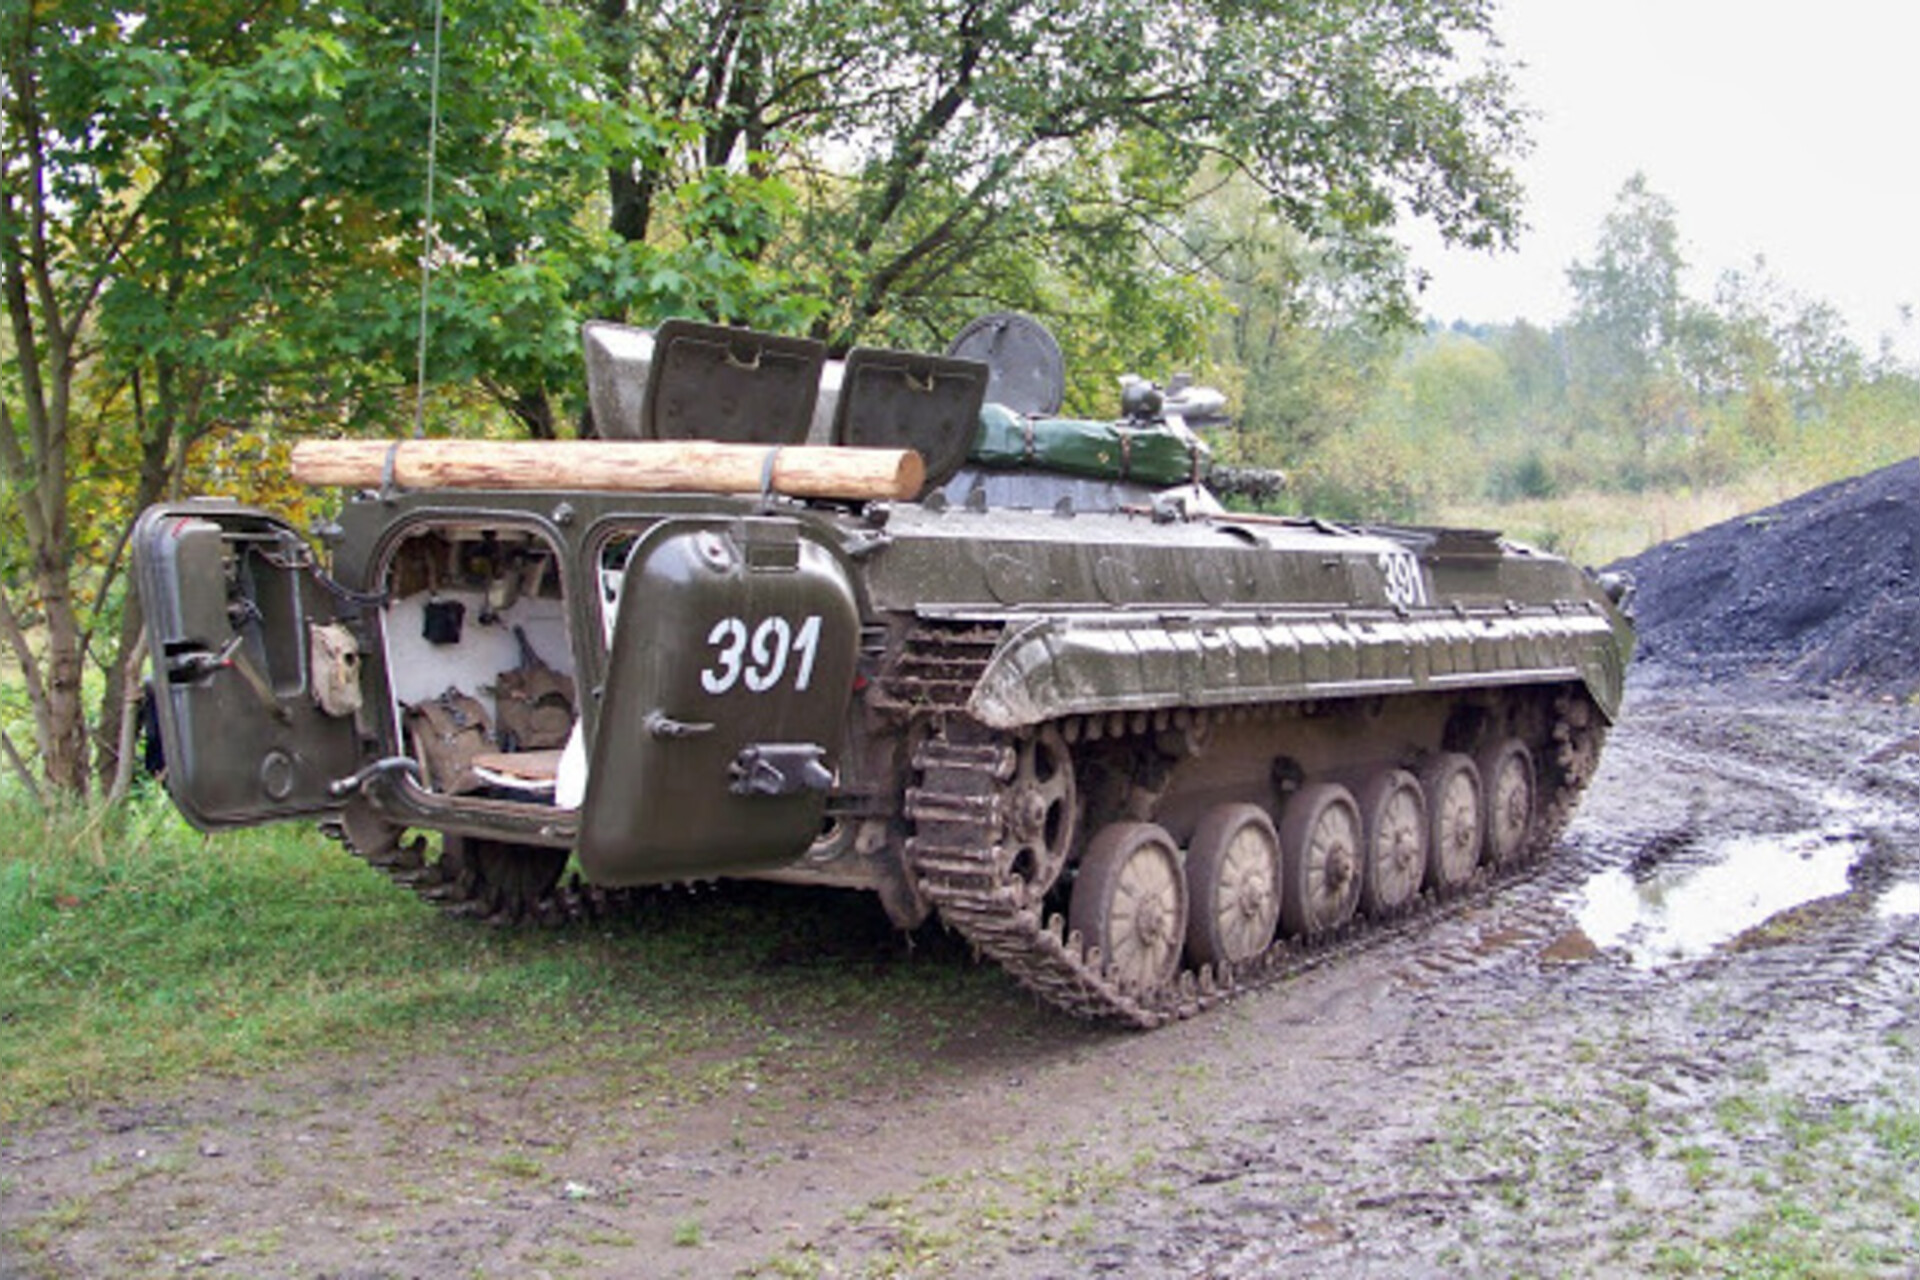 Panzer selber fahren im BMP